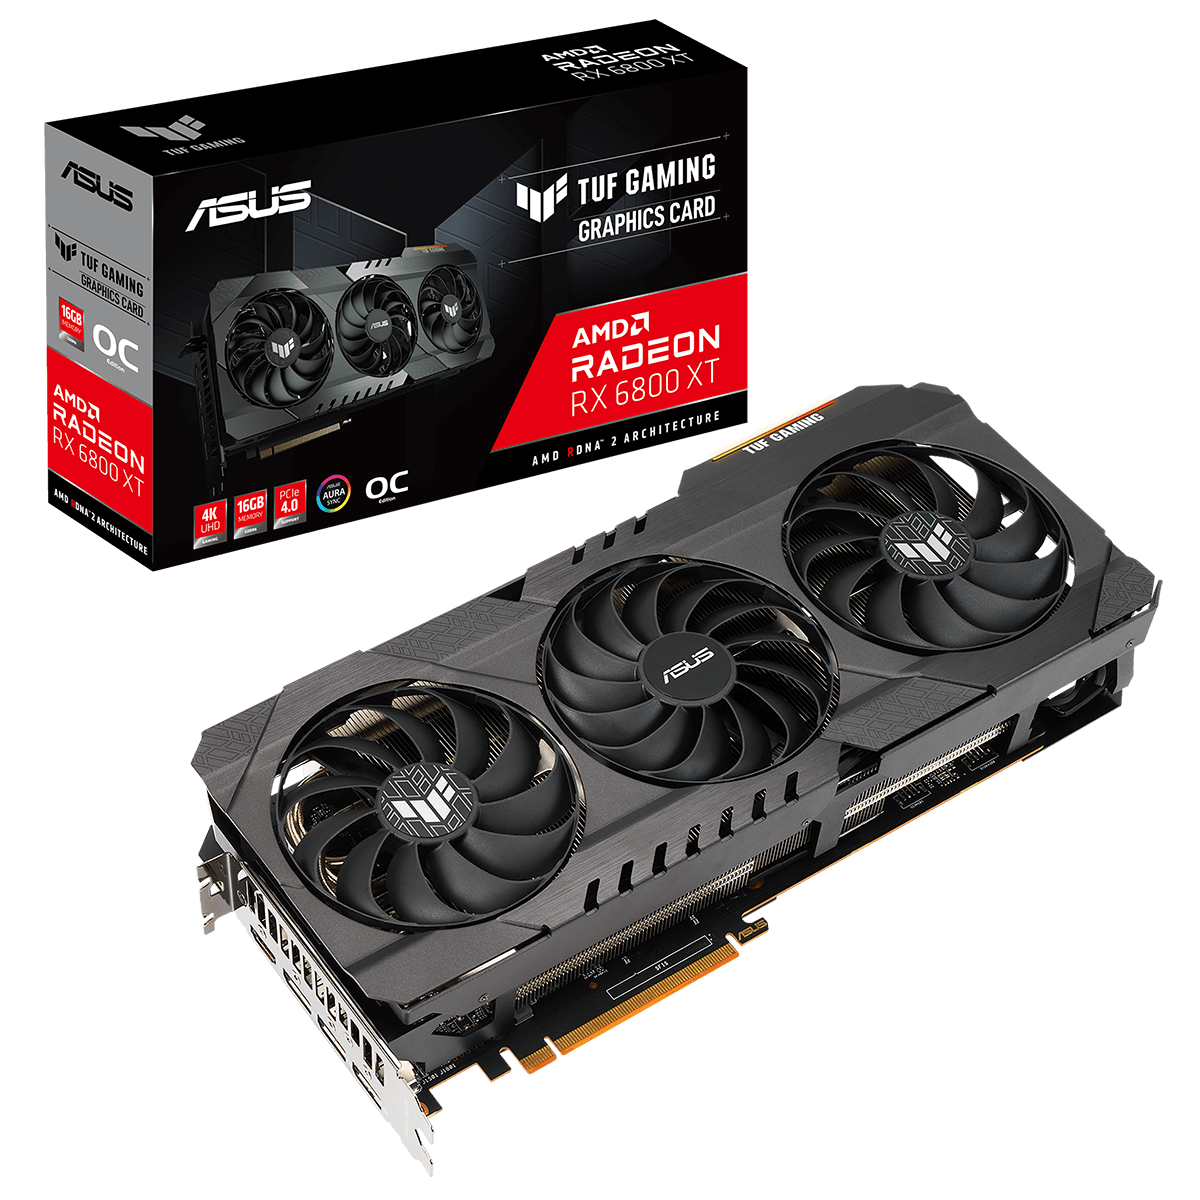 Kit Upgrade ASUS TUF Gaming Radeon RX 6800 XT + AMD Ryzen 7 5800X + Brinde Jogo Dirt 5